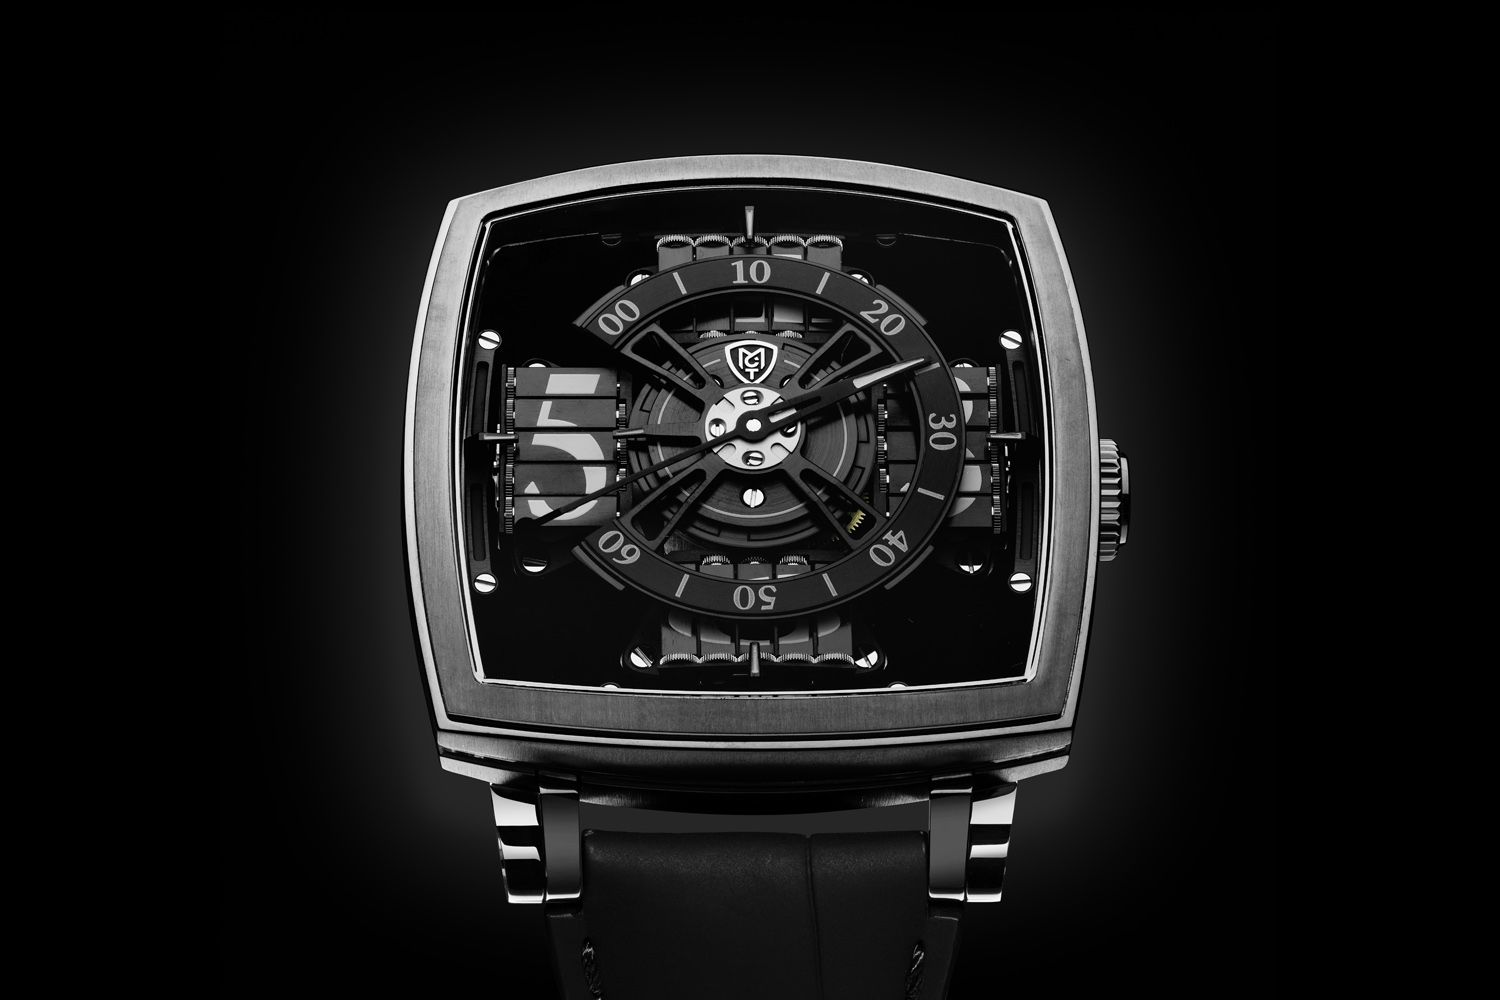 luxury watch by Manufacture Contemporaine du Temps (MCT) in Switzerland.